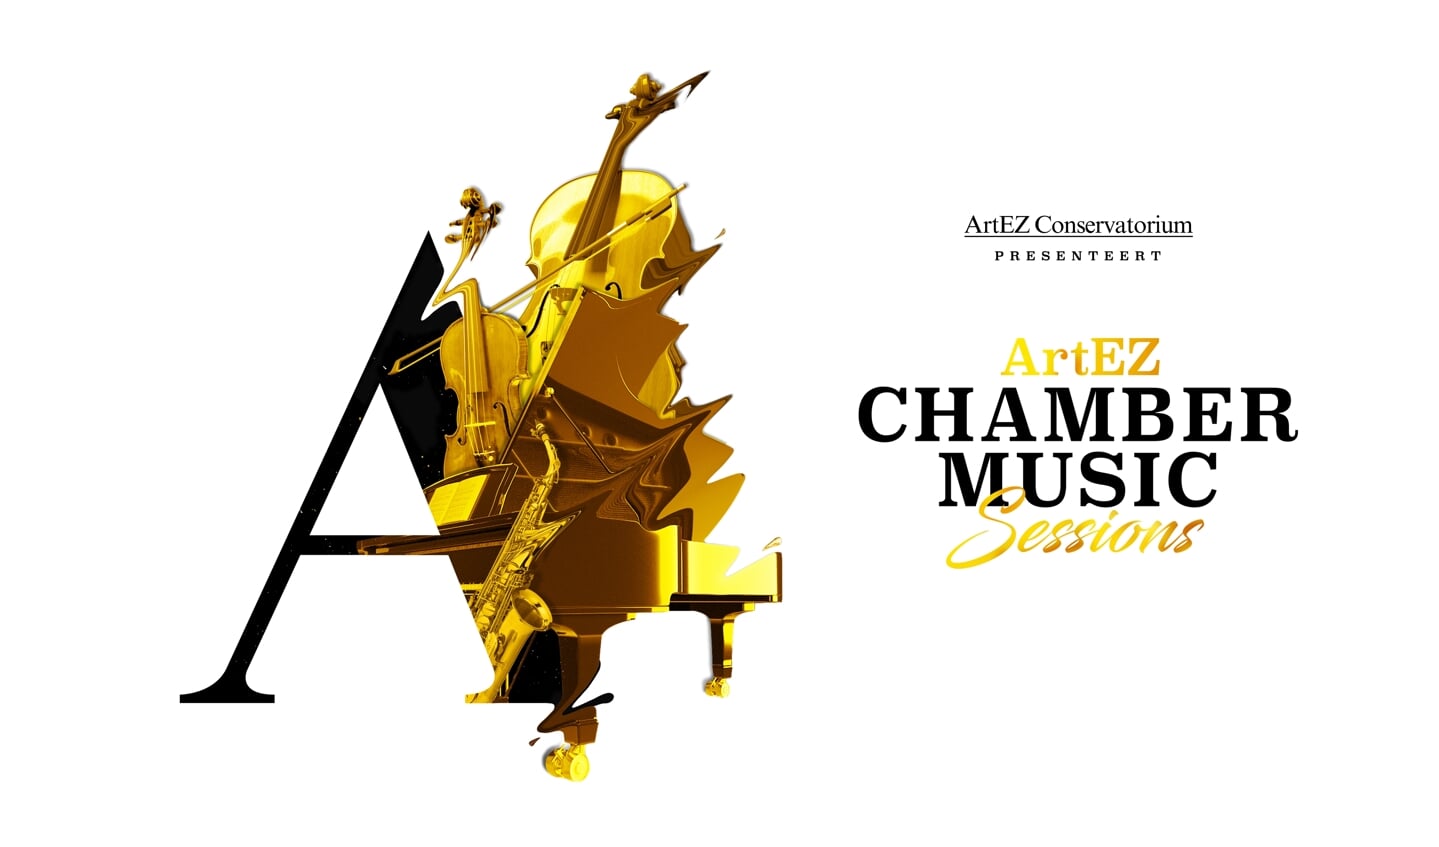 ArtEZ Conservatorium presenteert de ArtEZ Chamber Music Sessions